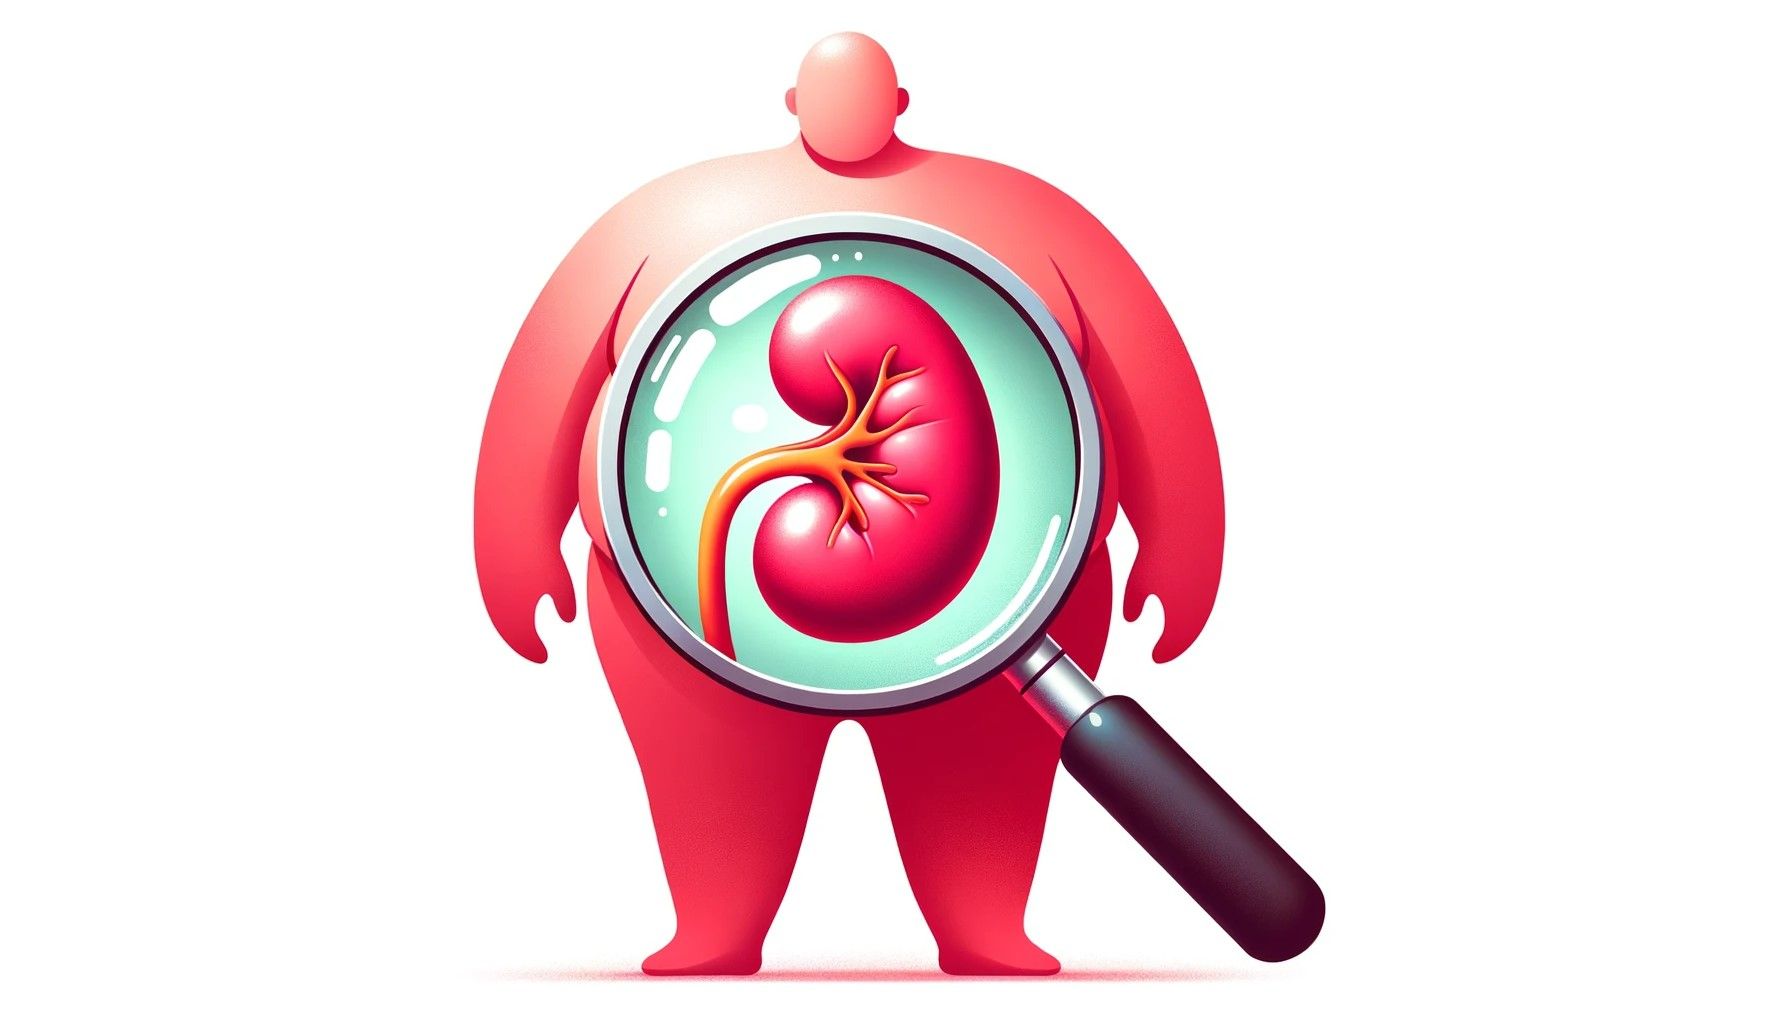 Detection of kidney health